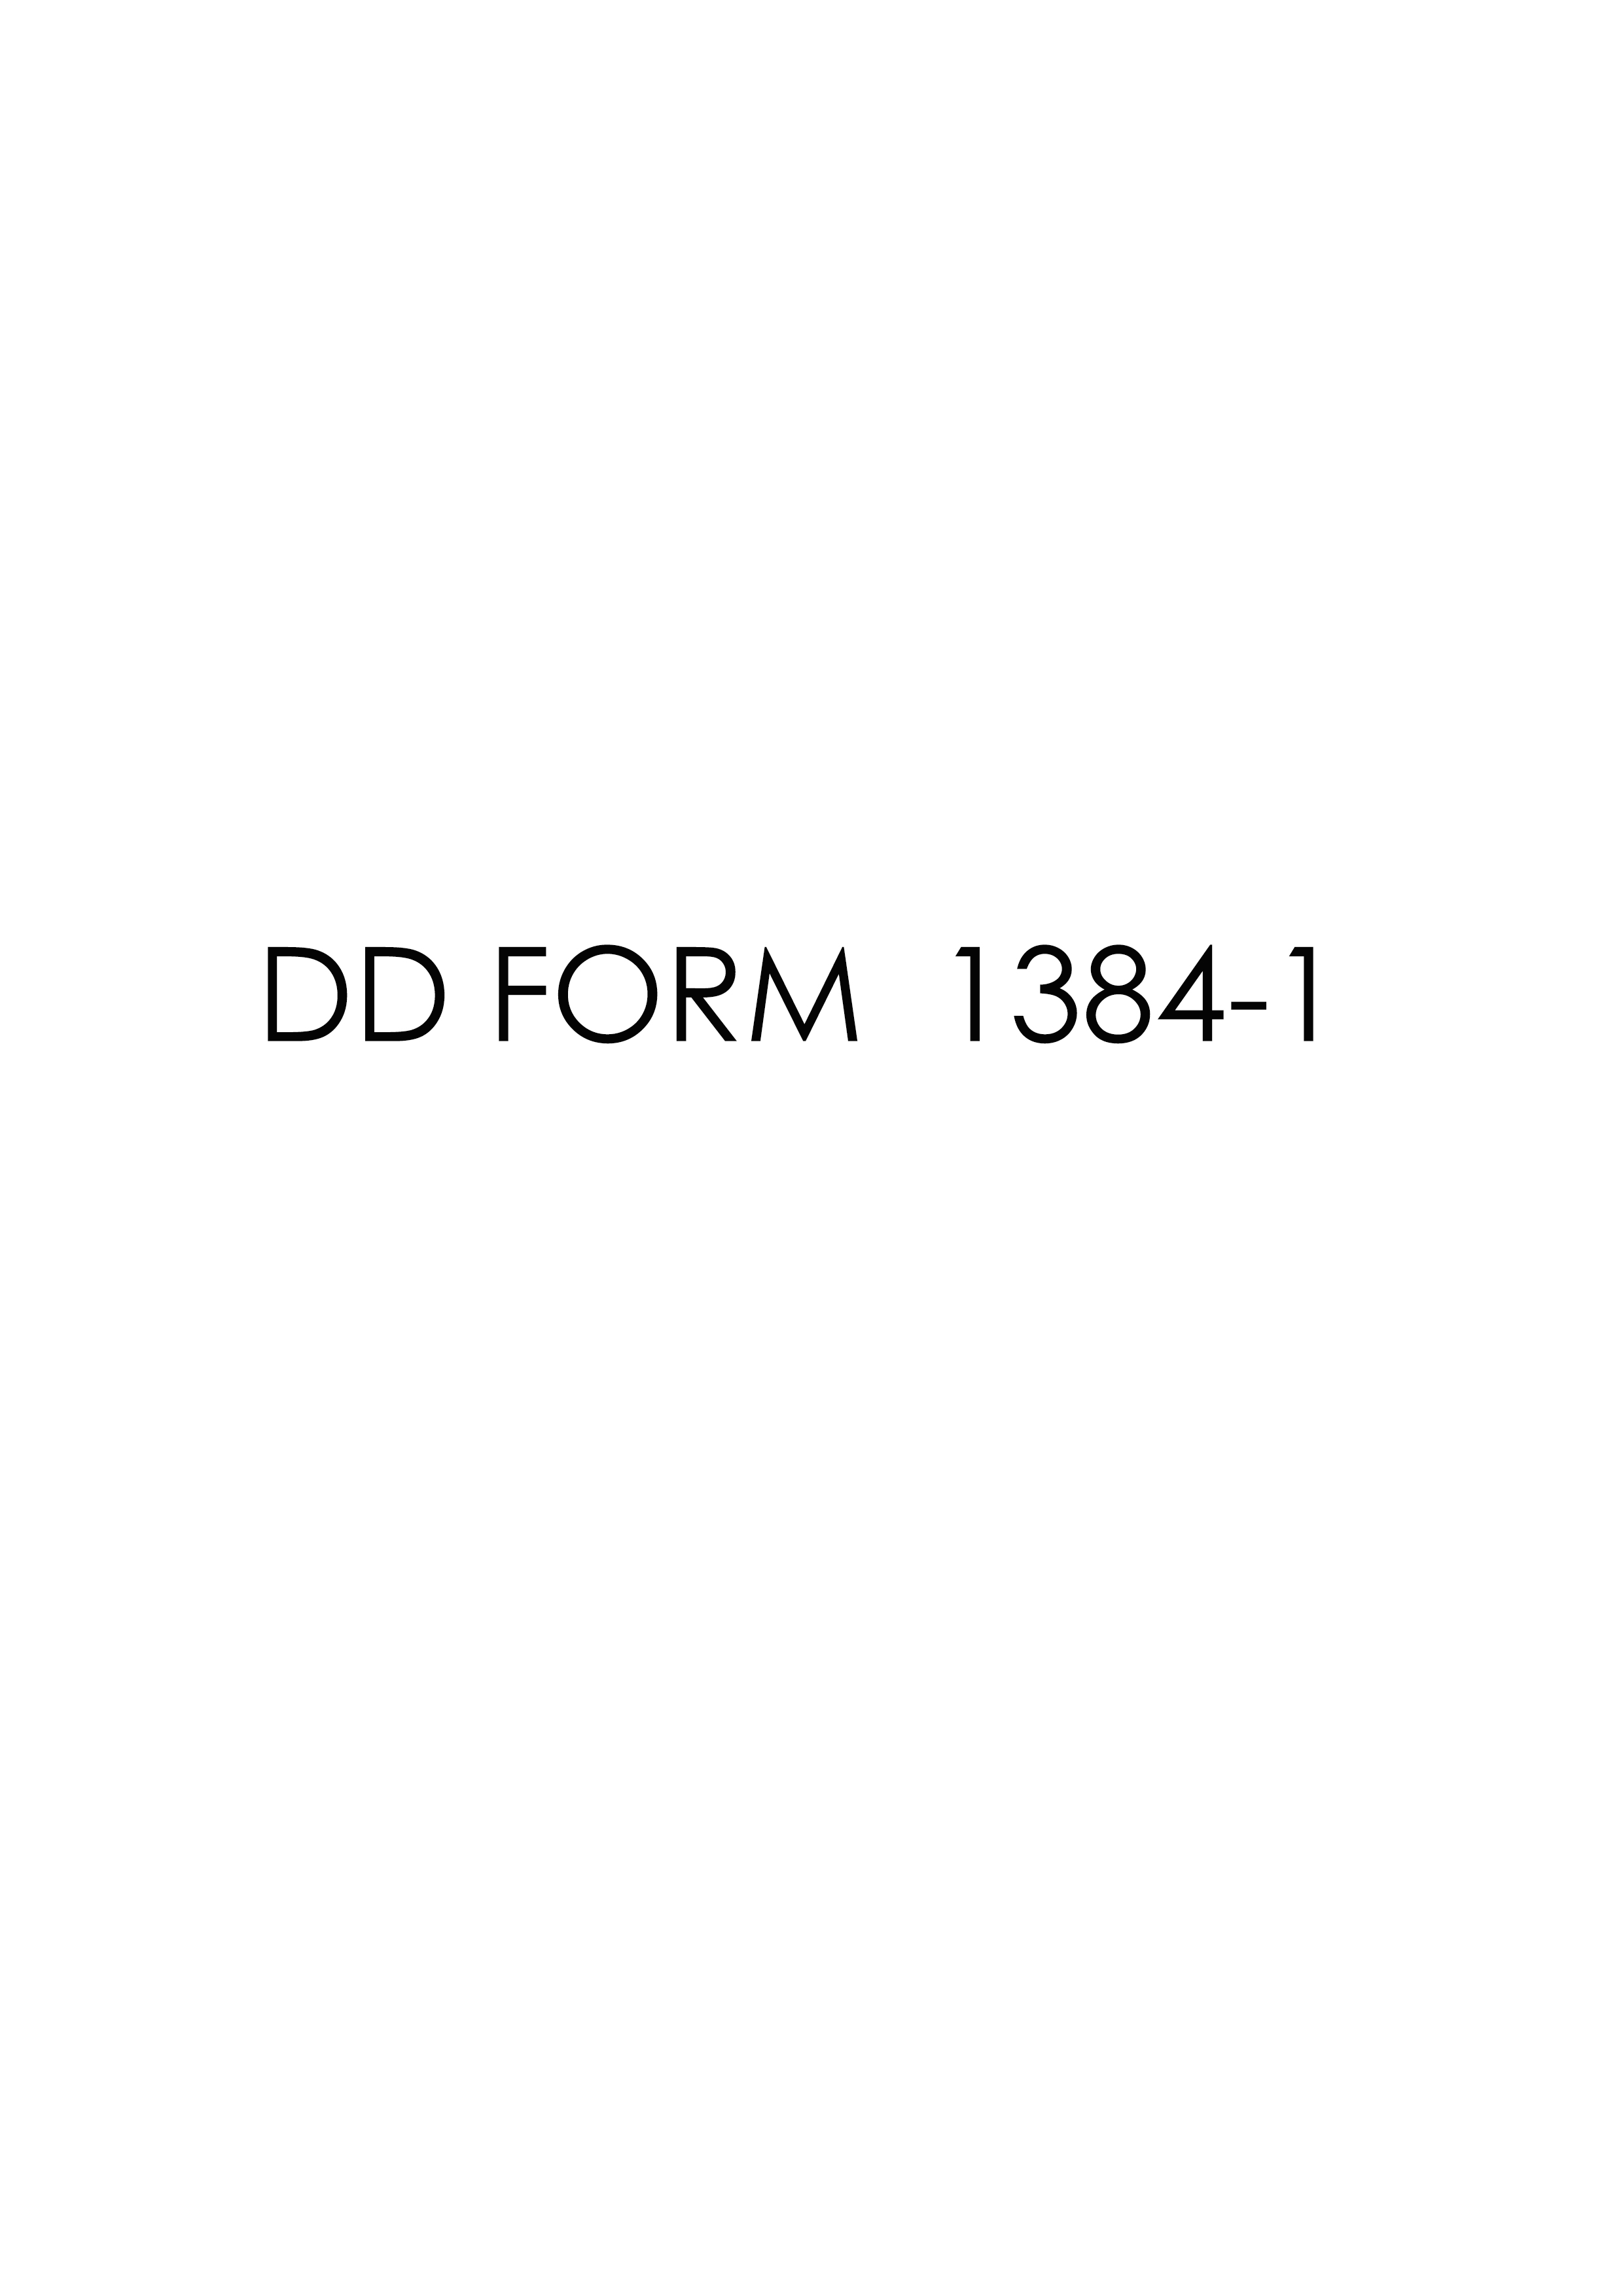 Download dd 1384-1 Form